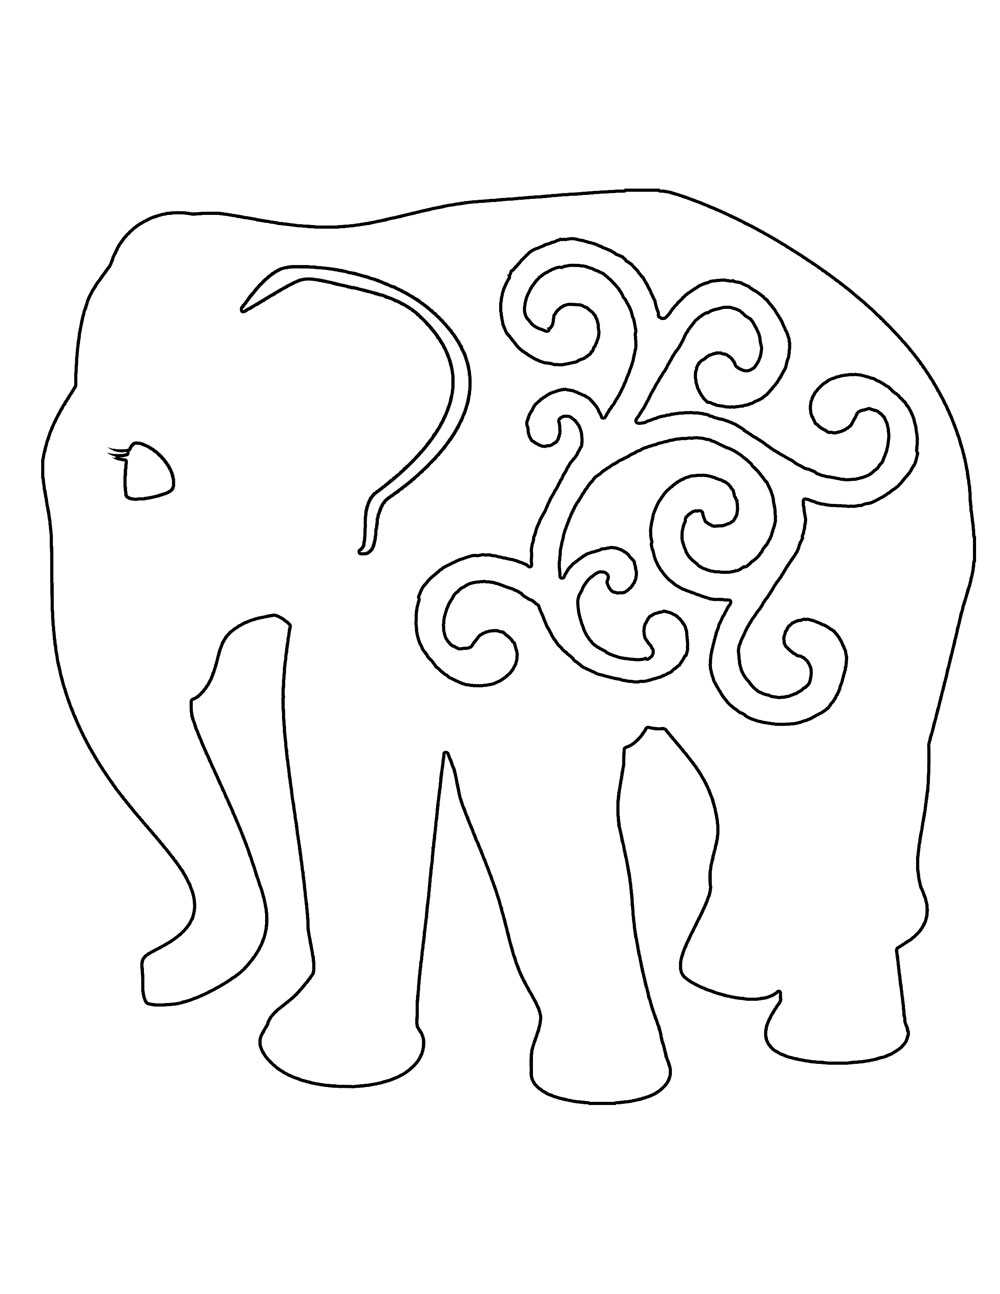 Tissue paper animal sun catchers elephant template